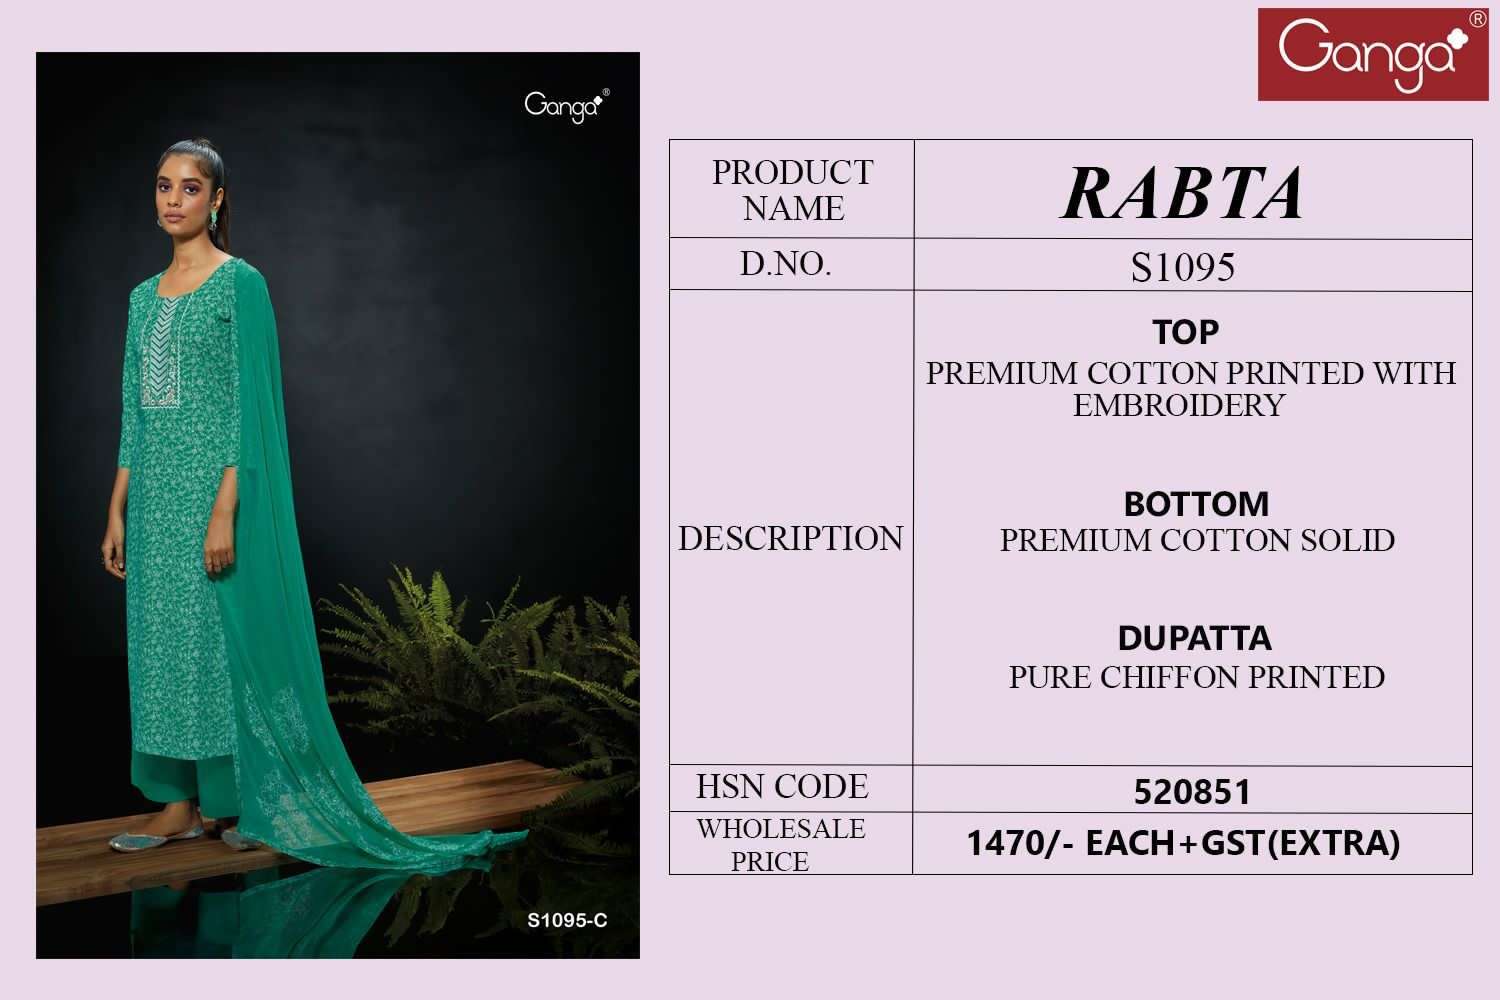 ganga rabta 1095 series indian designer salwar kameez catalogue wholesale price surat